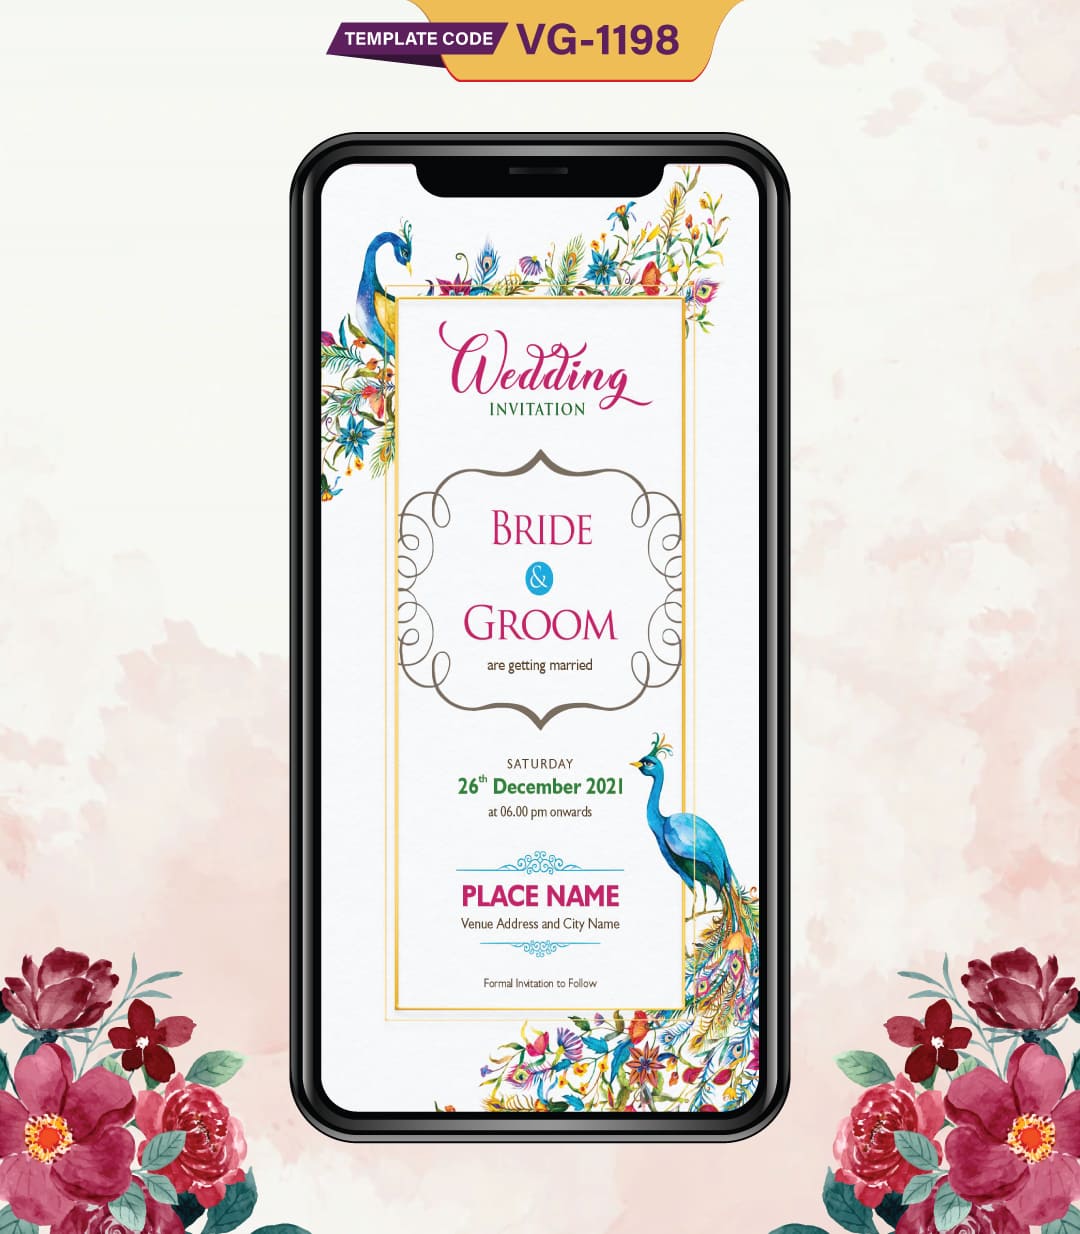 Peacock Theme Wedding Card